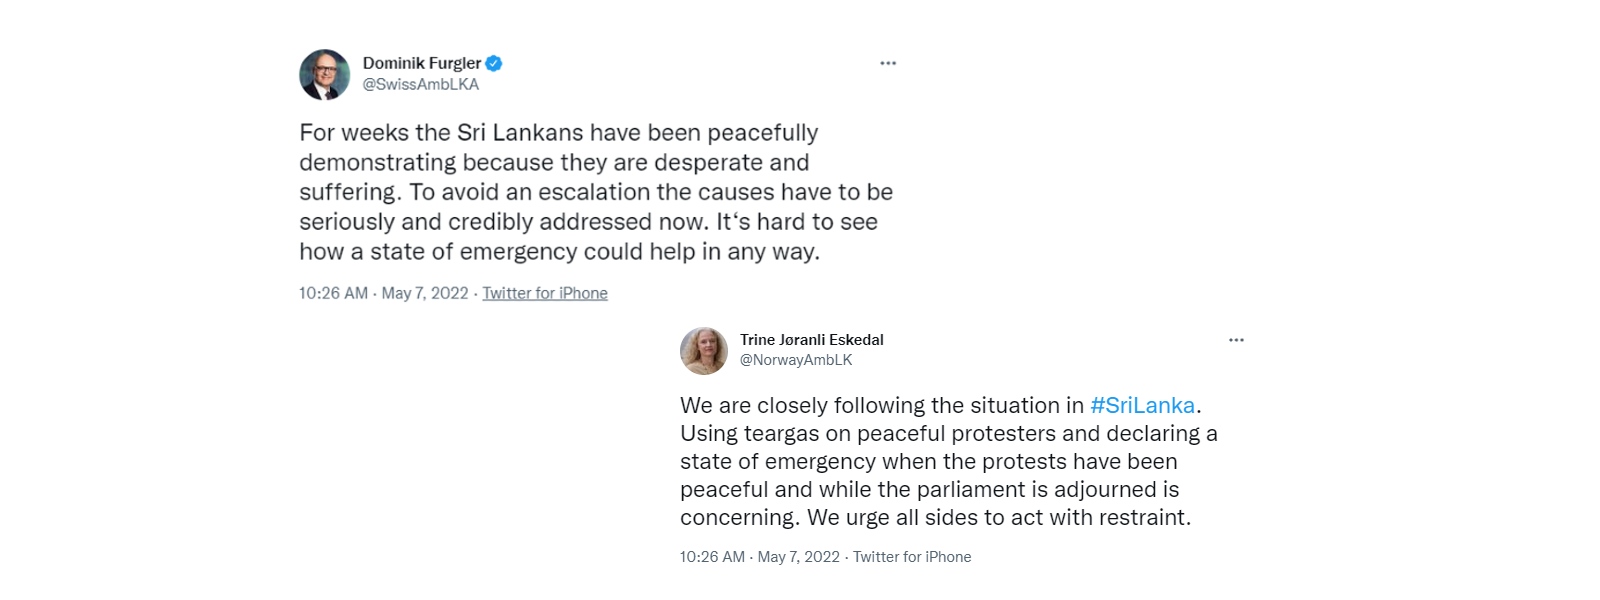 More envoys express concern regarding State of Emergency